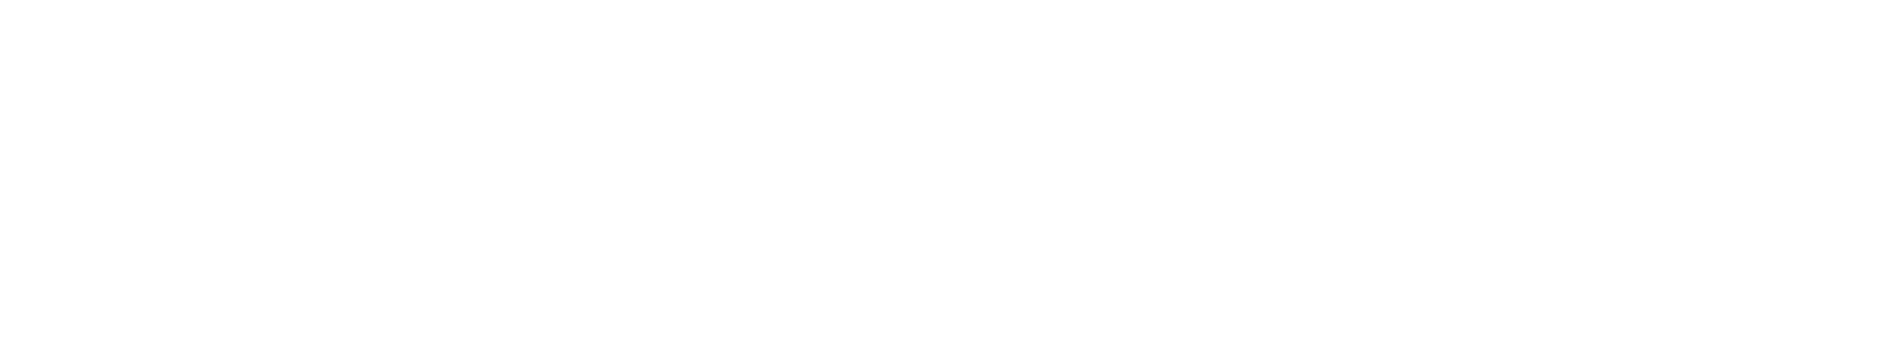 American Construction Logo - White